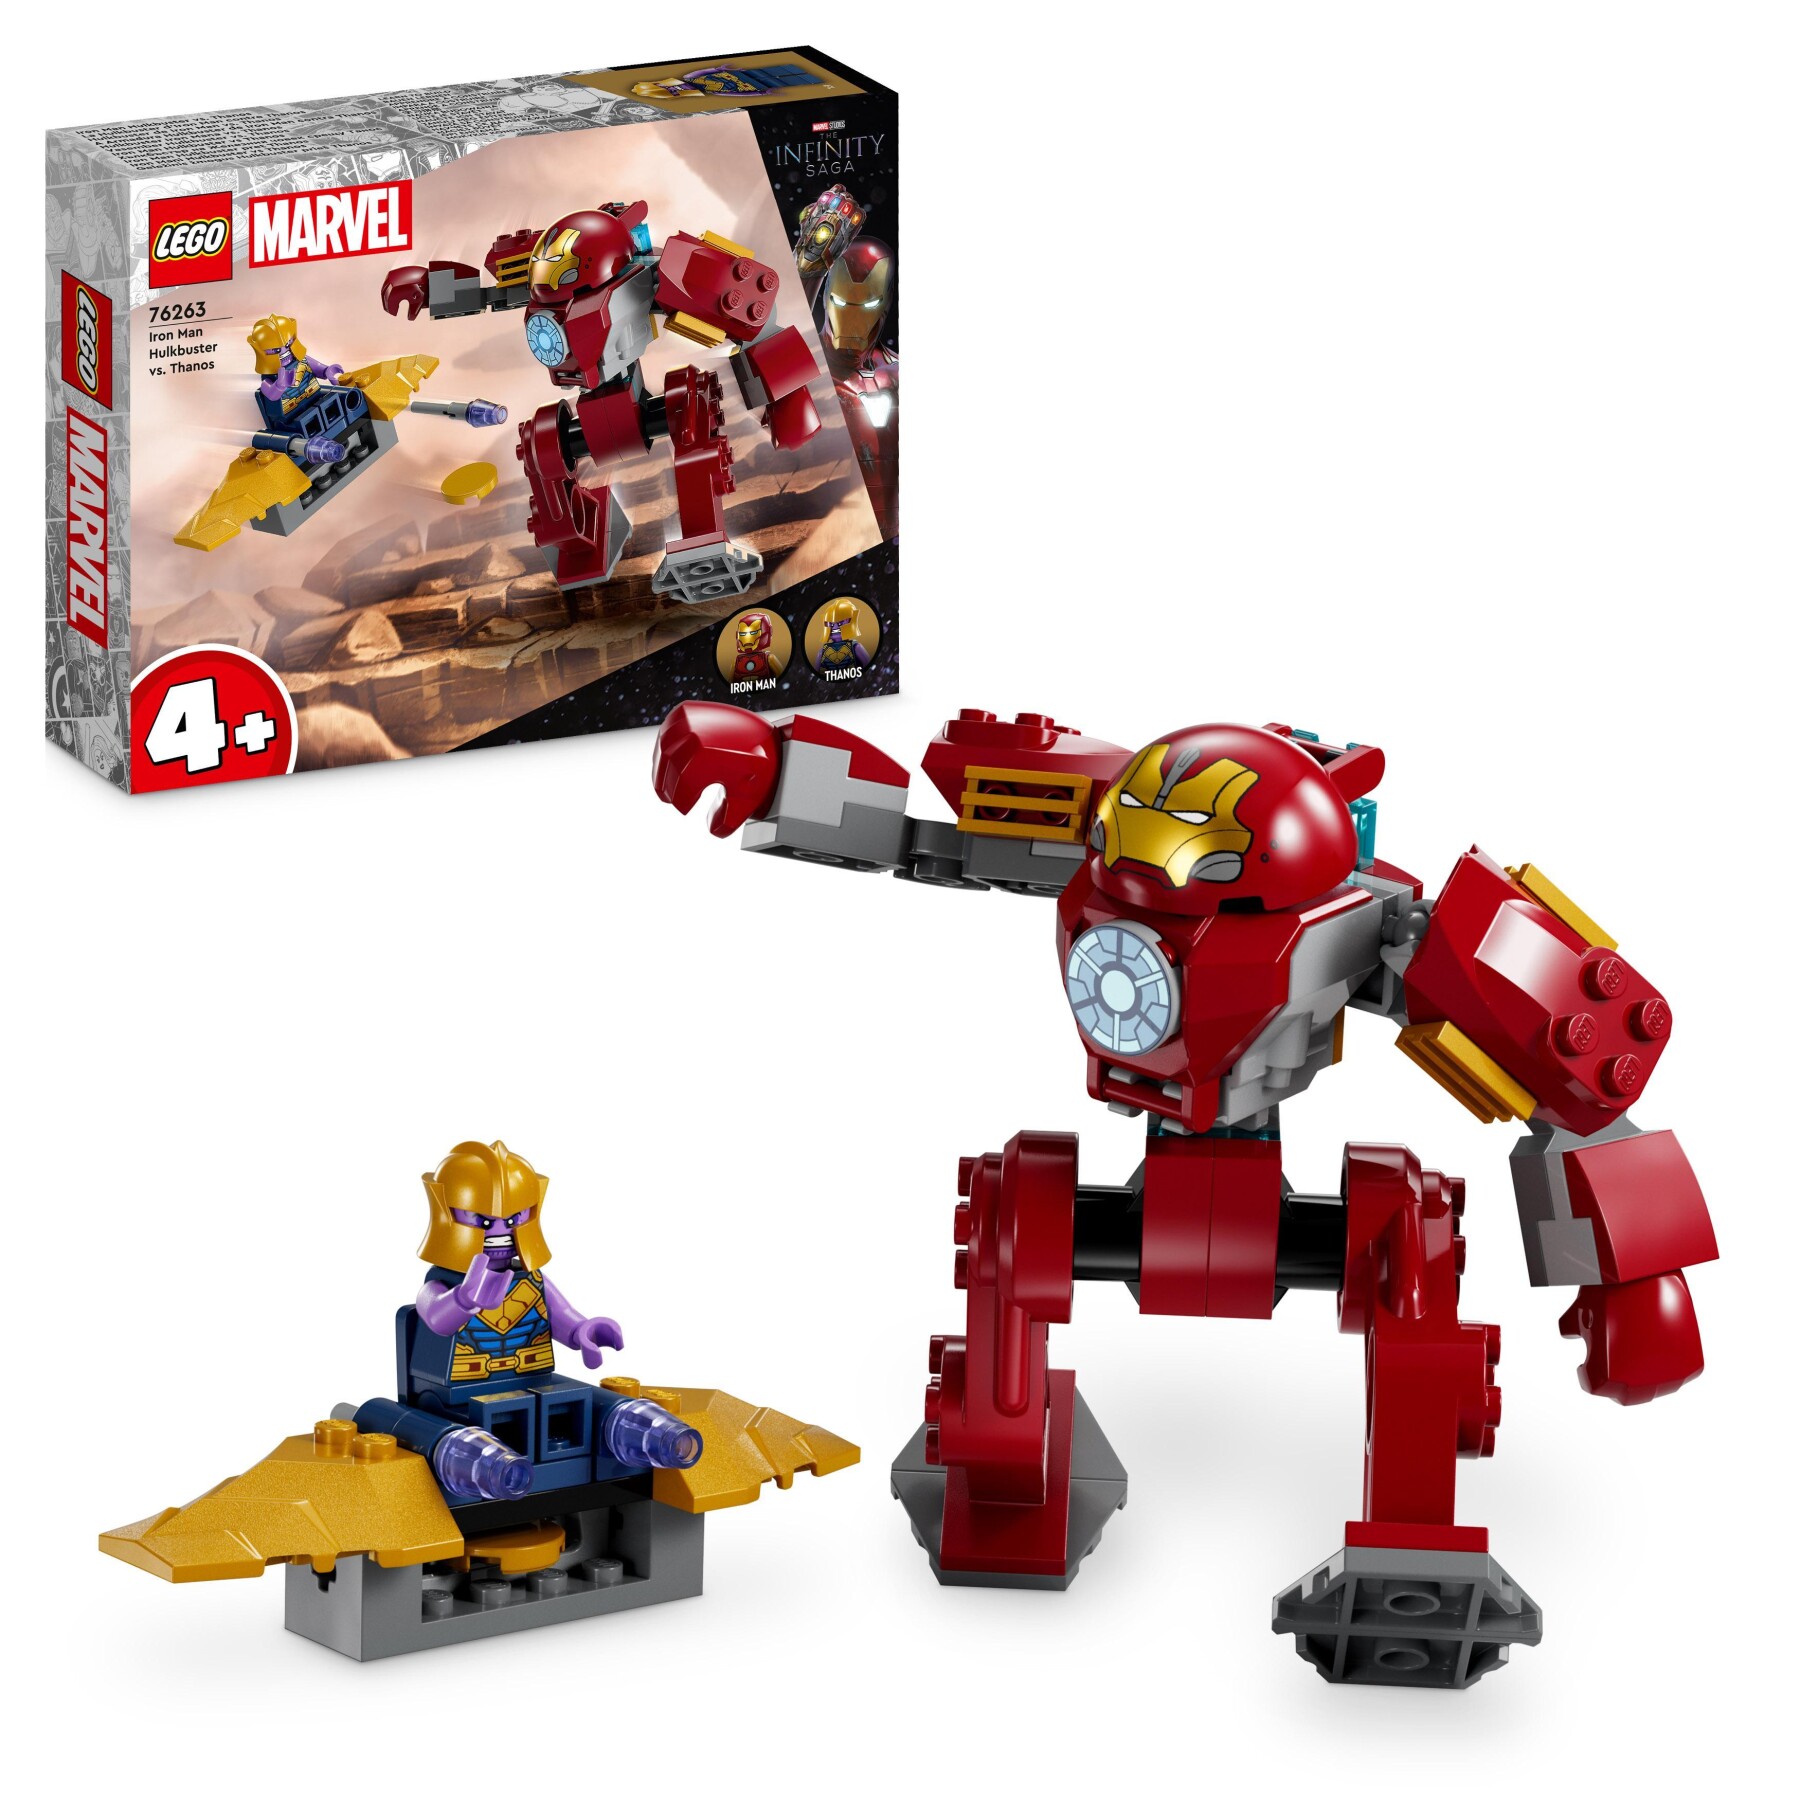 Lego marvel 76263 iron man hulkbuster vs. thanos, gioco per bambini 4+ anni, action figure con aereo giocattolo e 2 minifigure - LEGO SUPER HEROES, Avengers